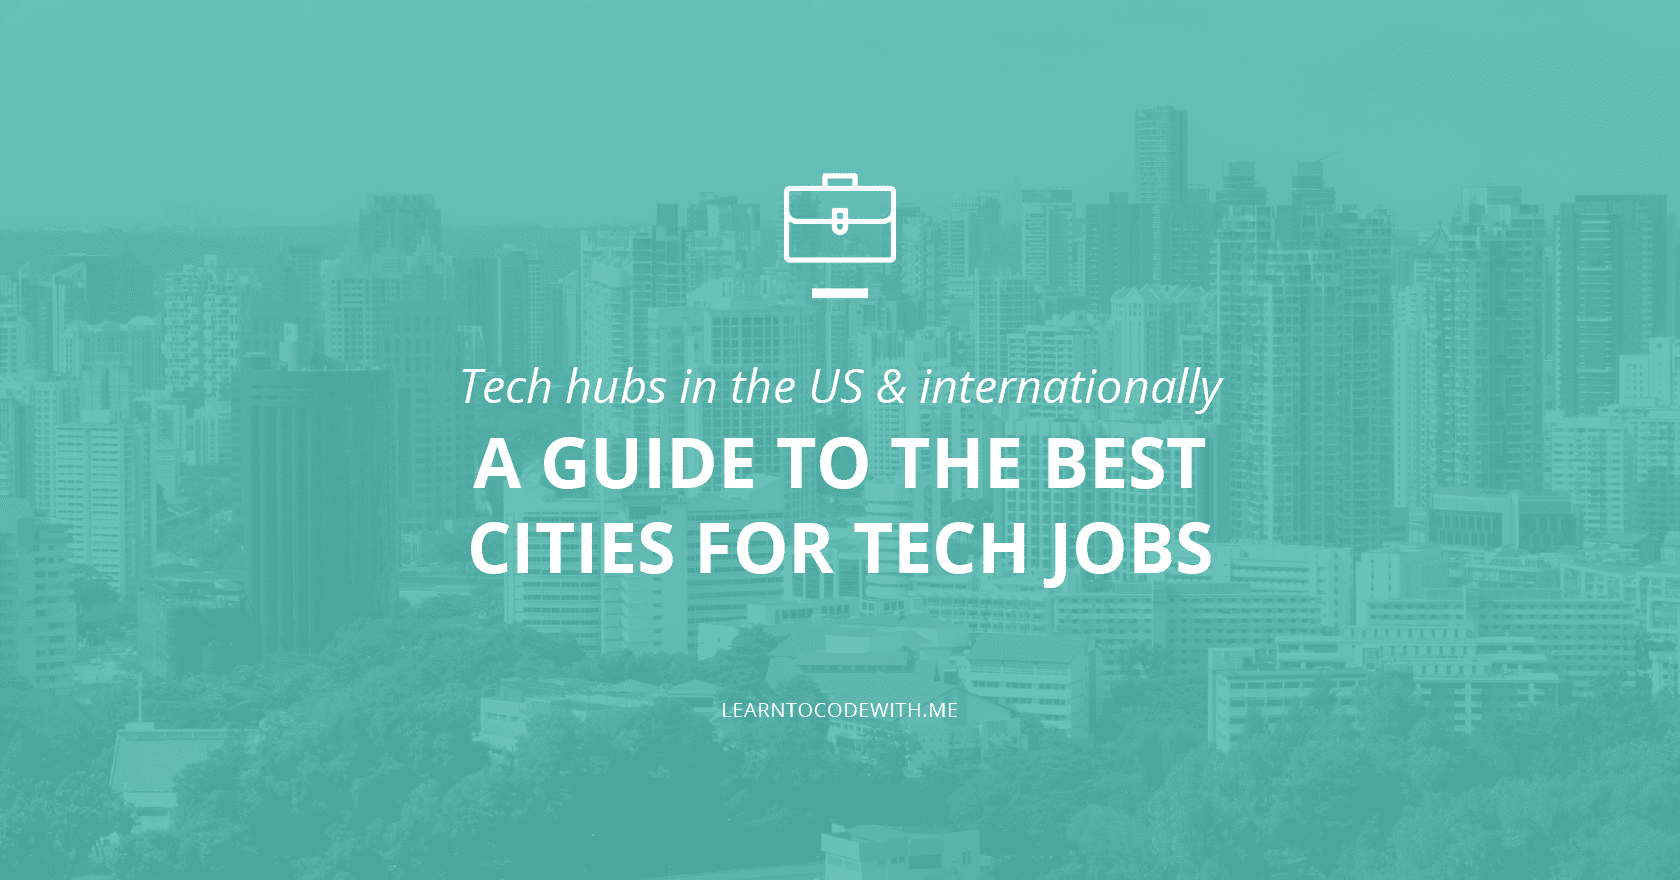 The best cities for tech jobs